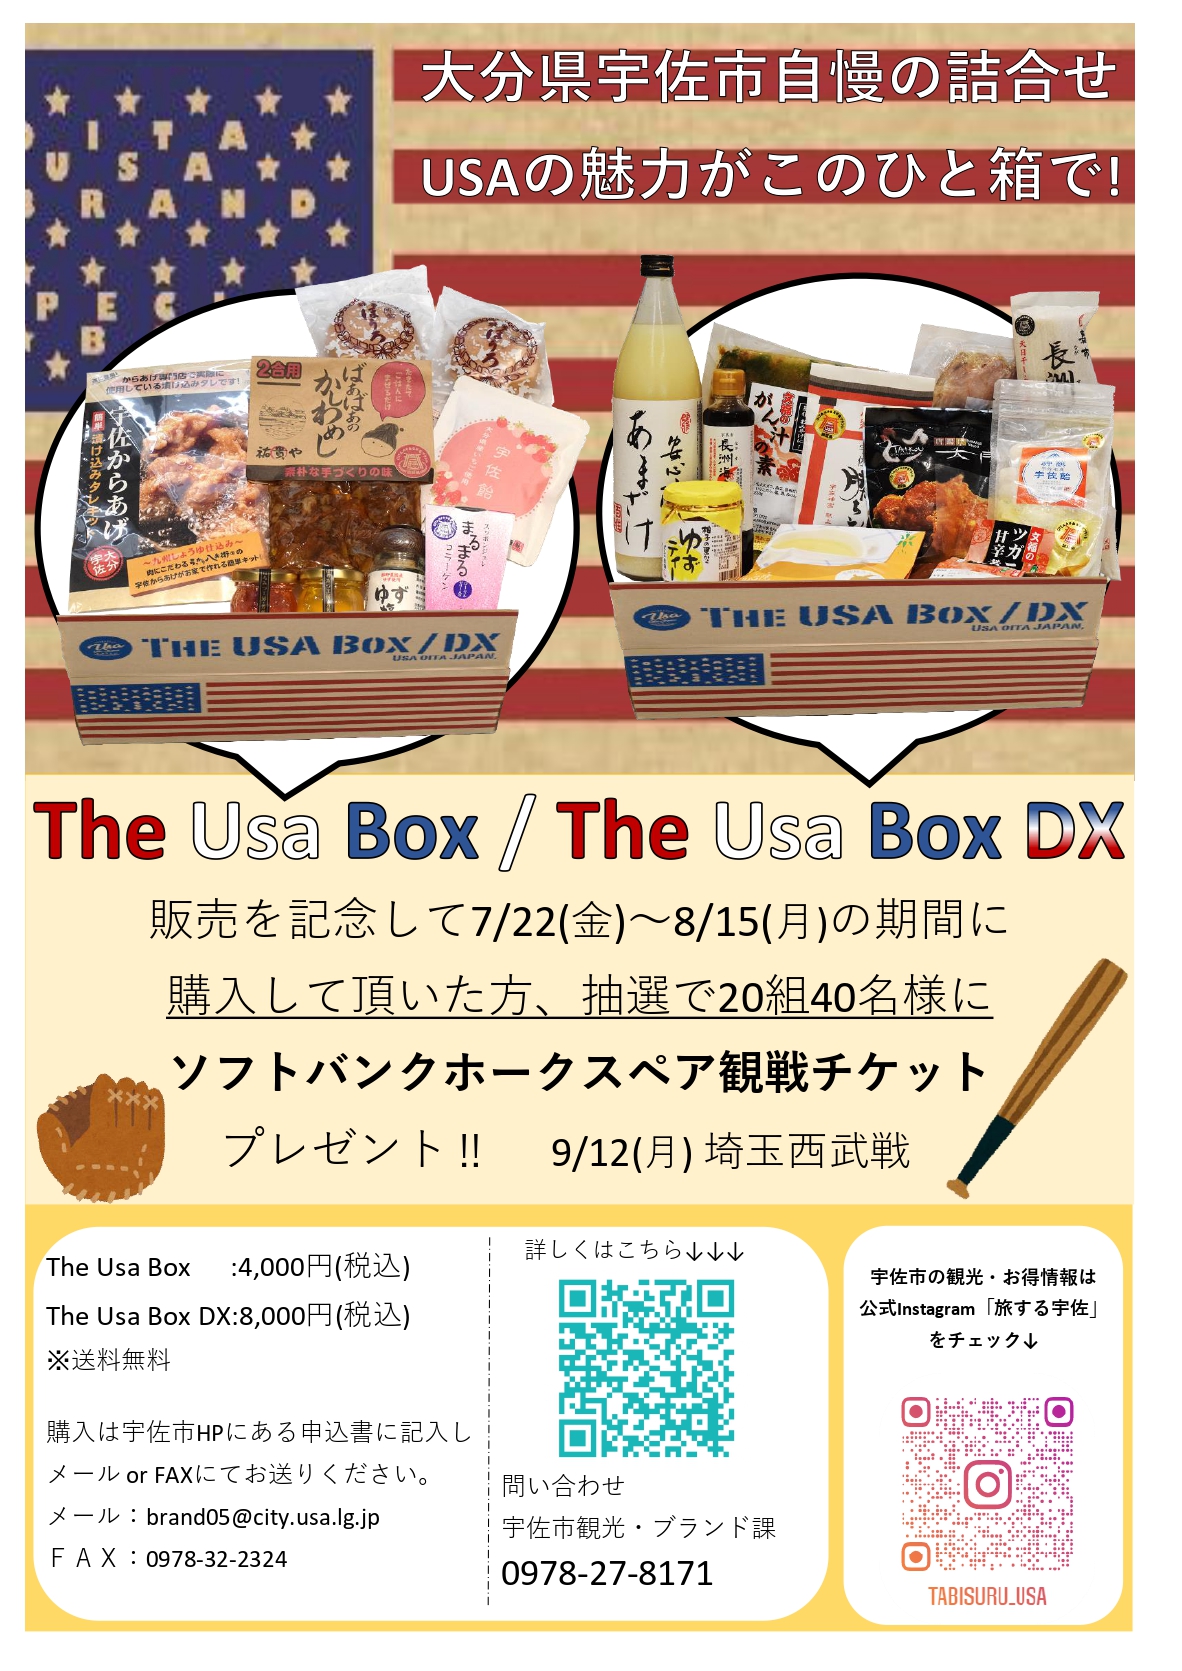 The Usa Box